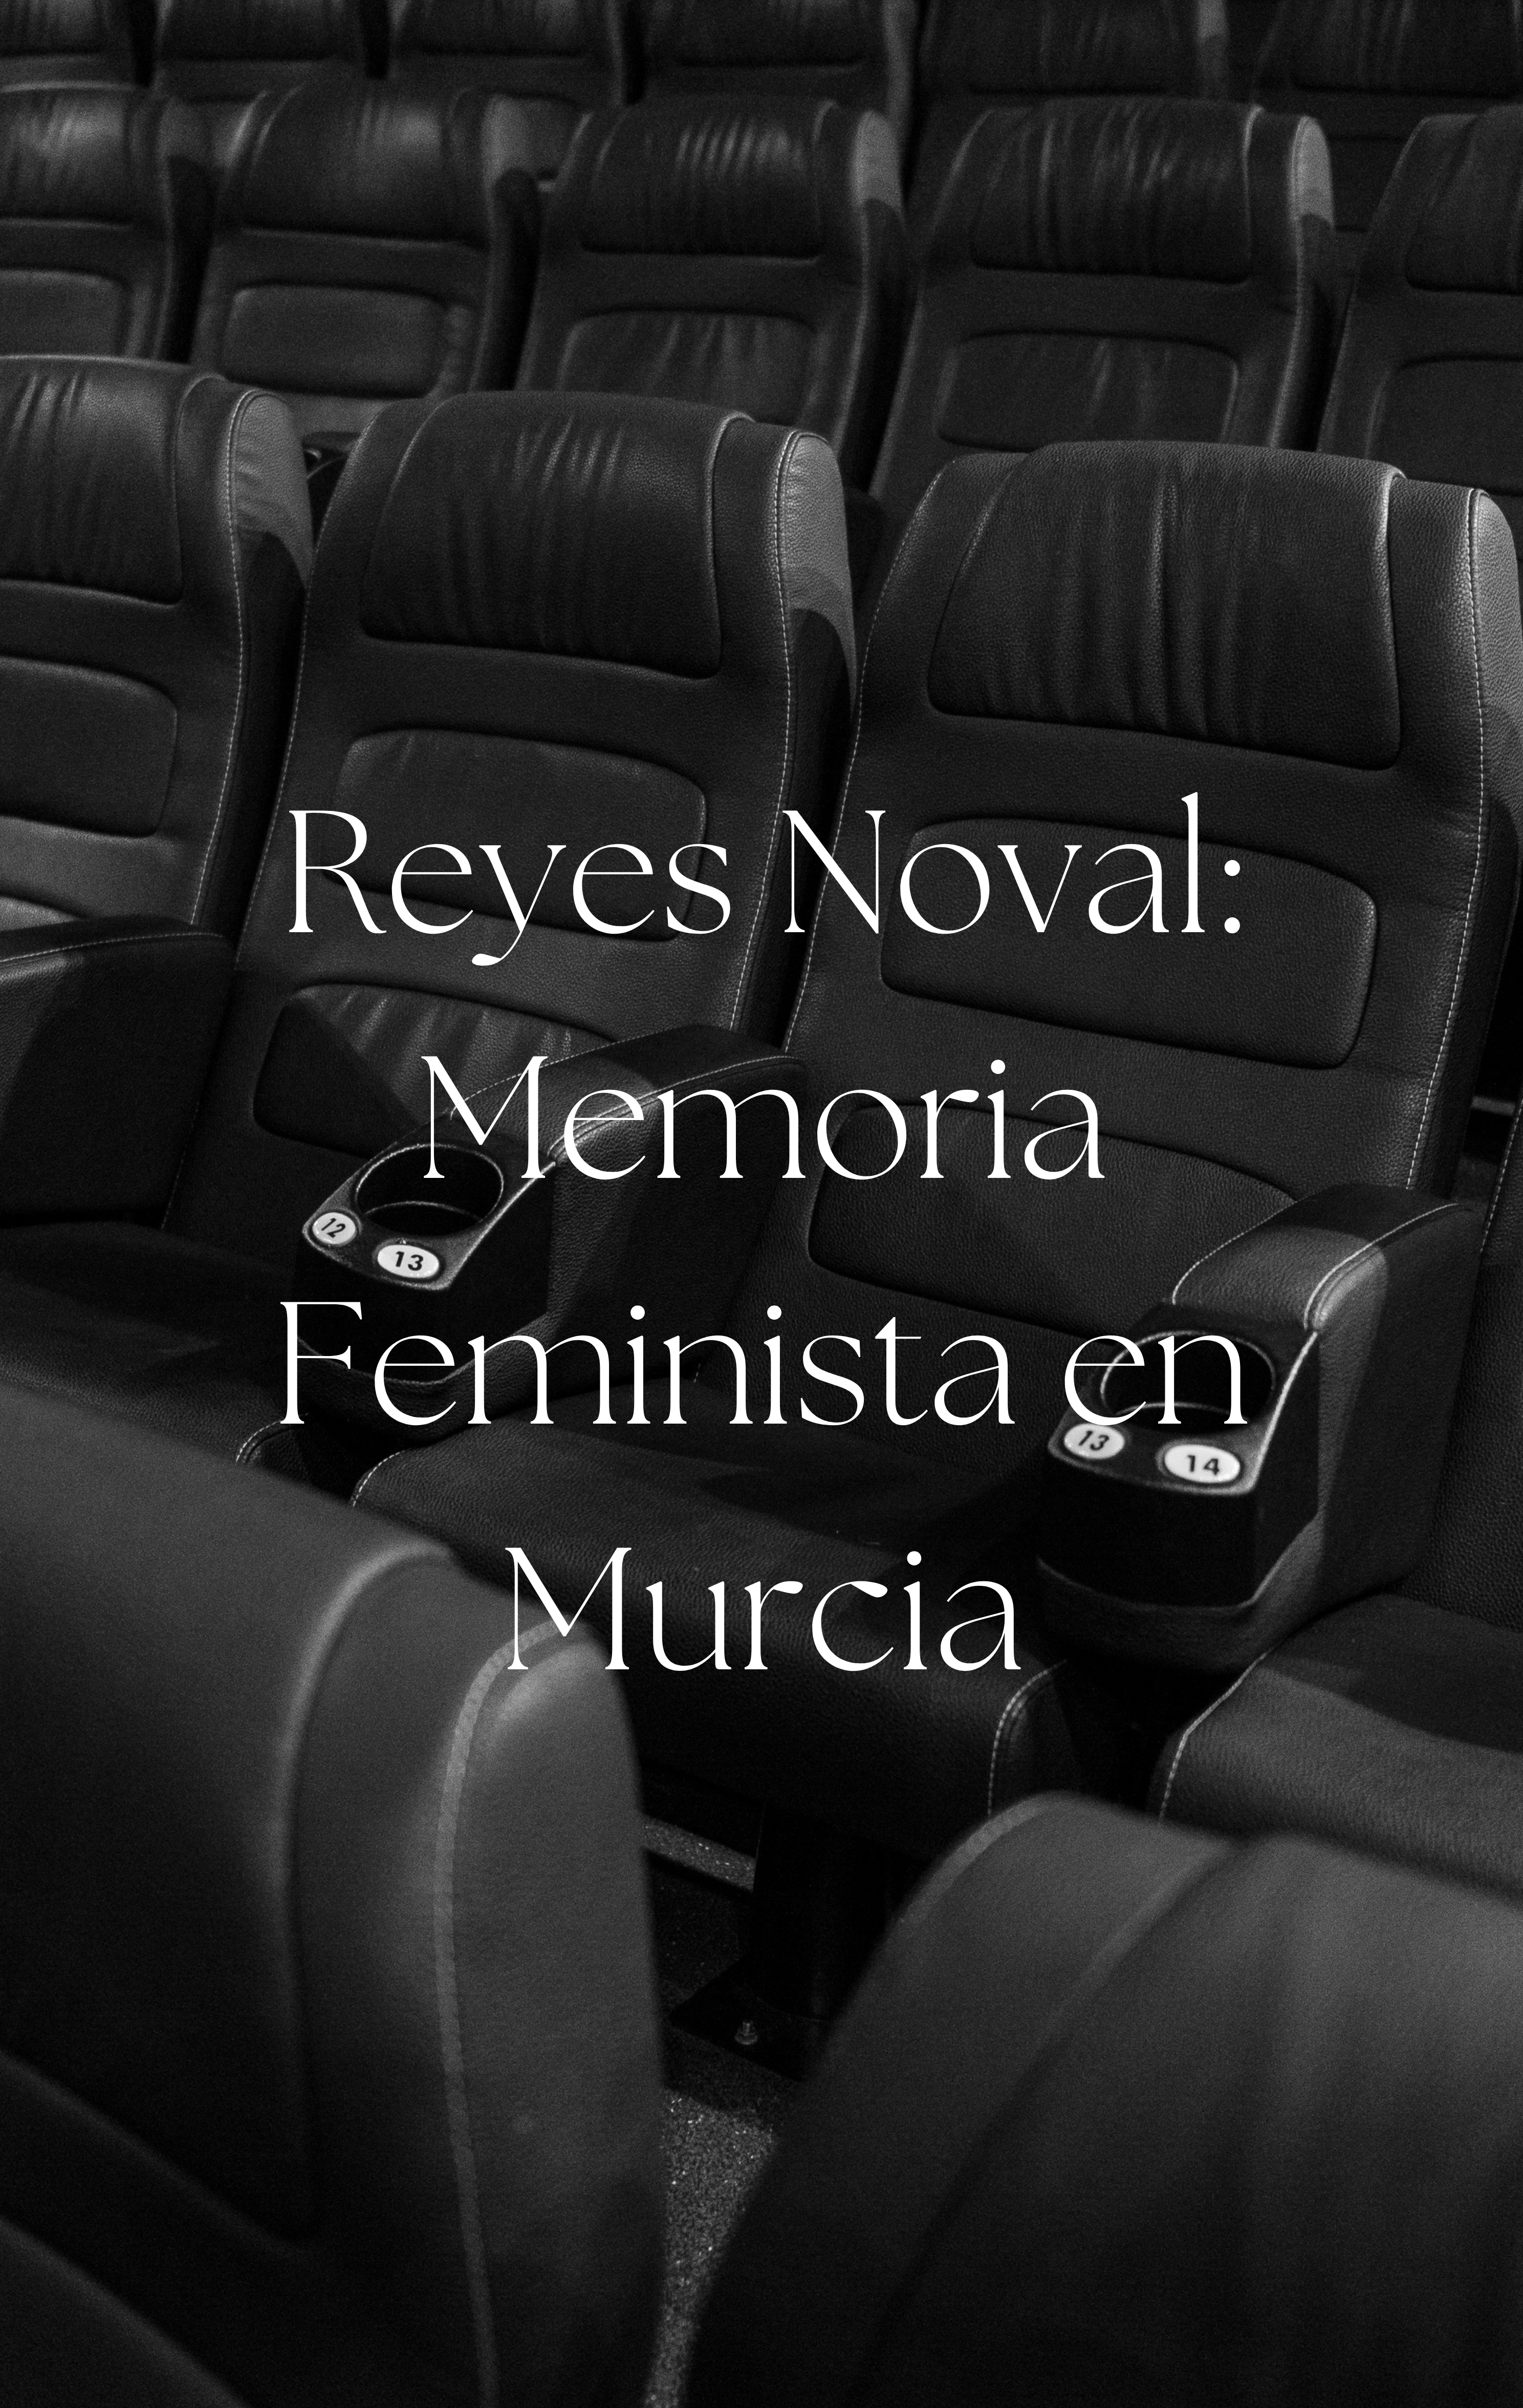 Reyes Noval: Memoria Feminista en Murcia